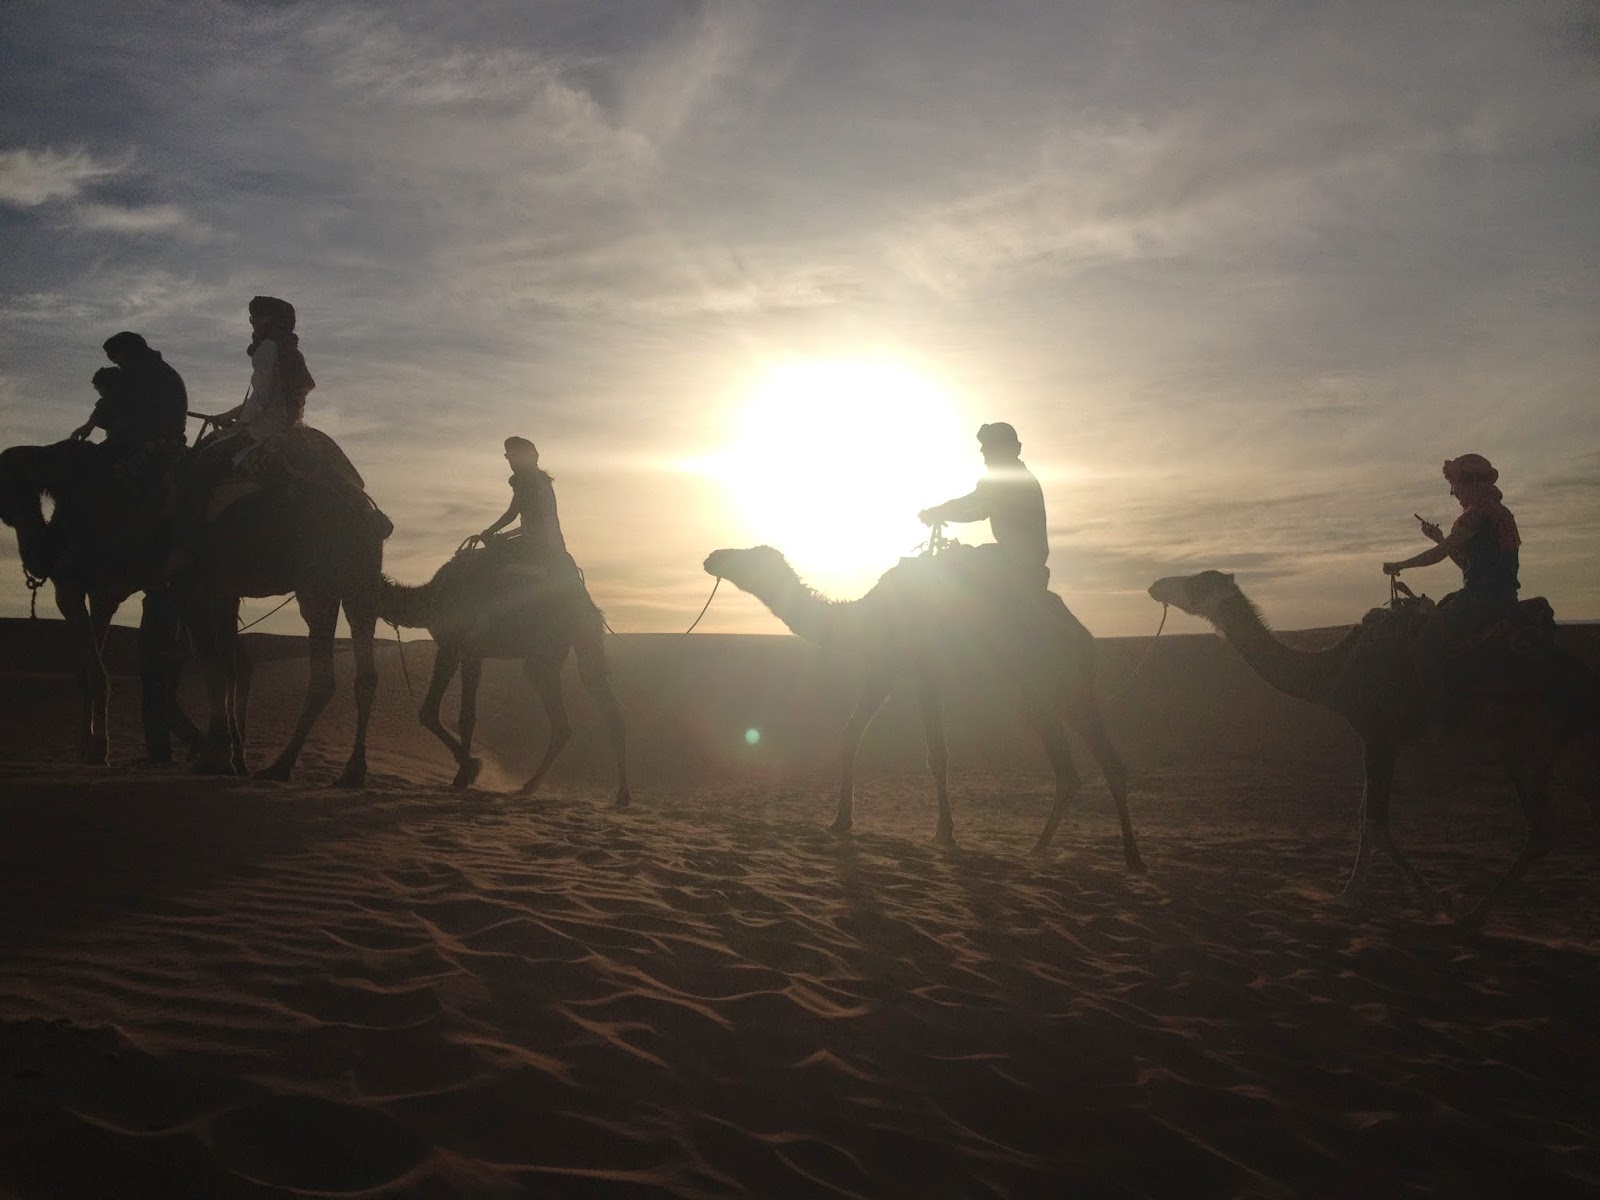 Ruta de 6 días por el sur de Marruecos - Blogs de Marruecos - De Marrakech a Chegaga (9)